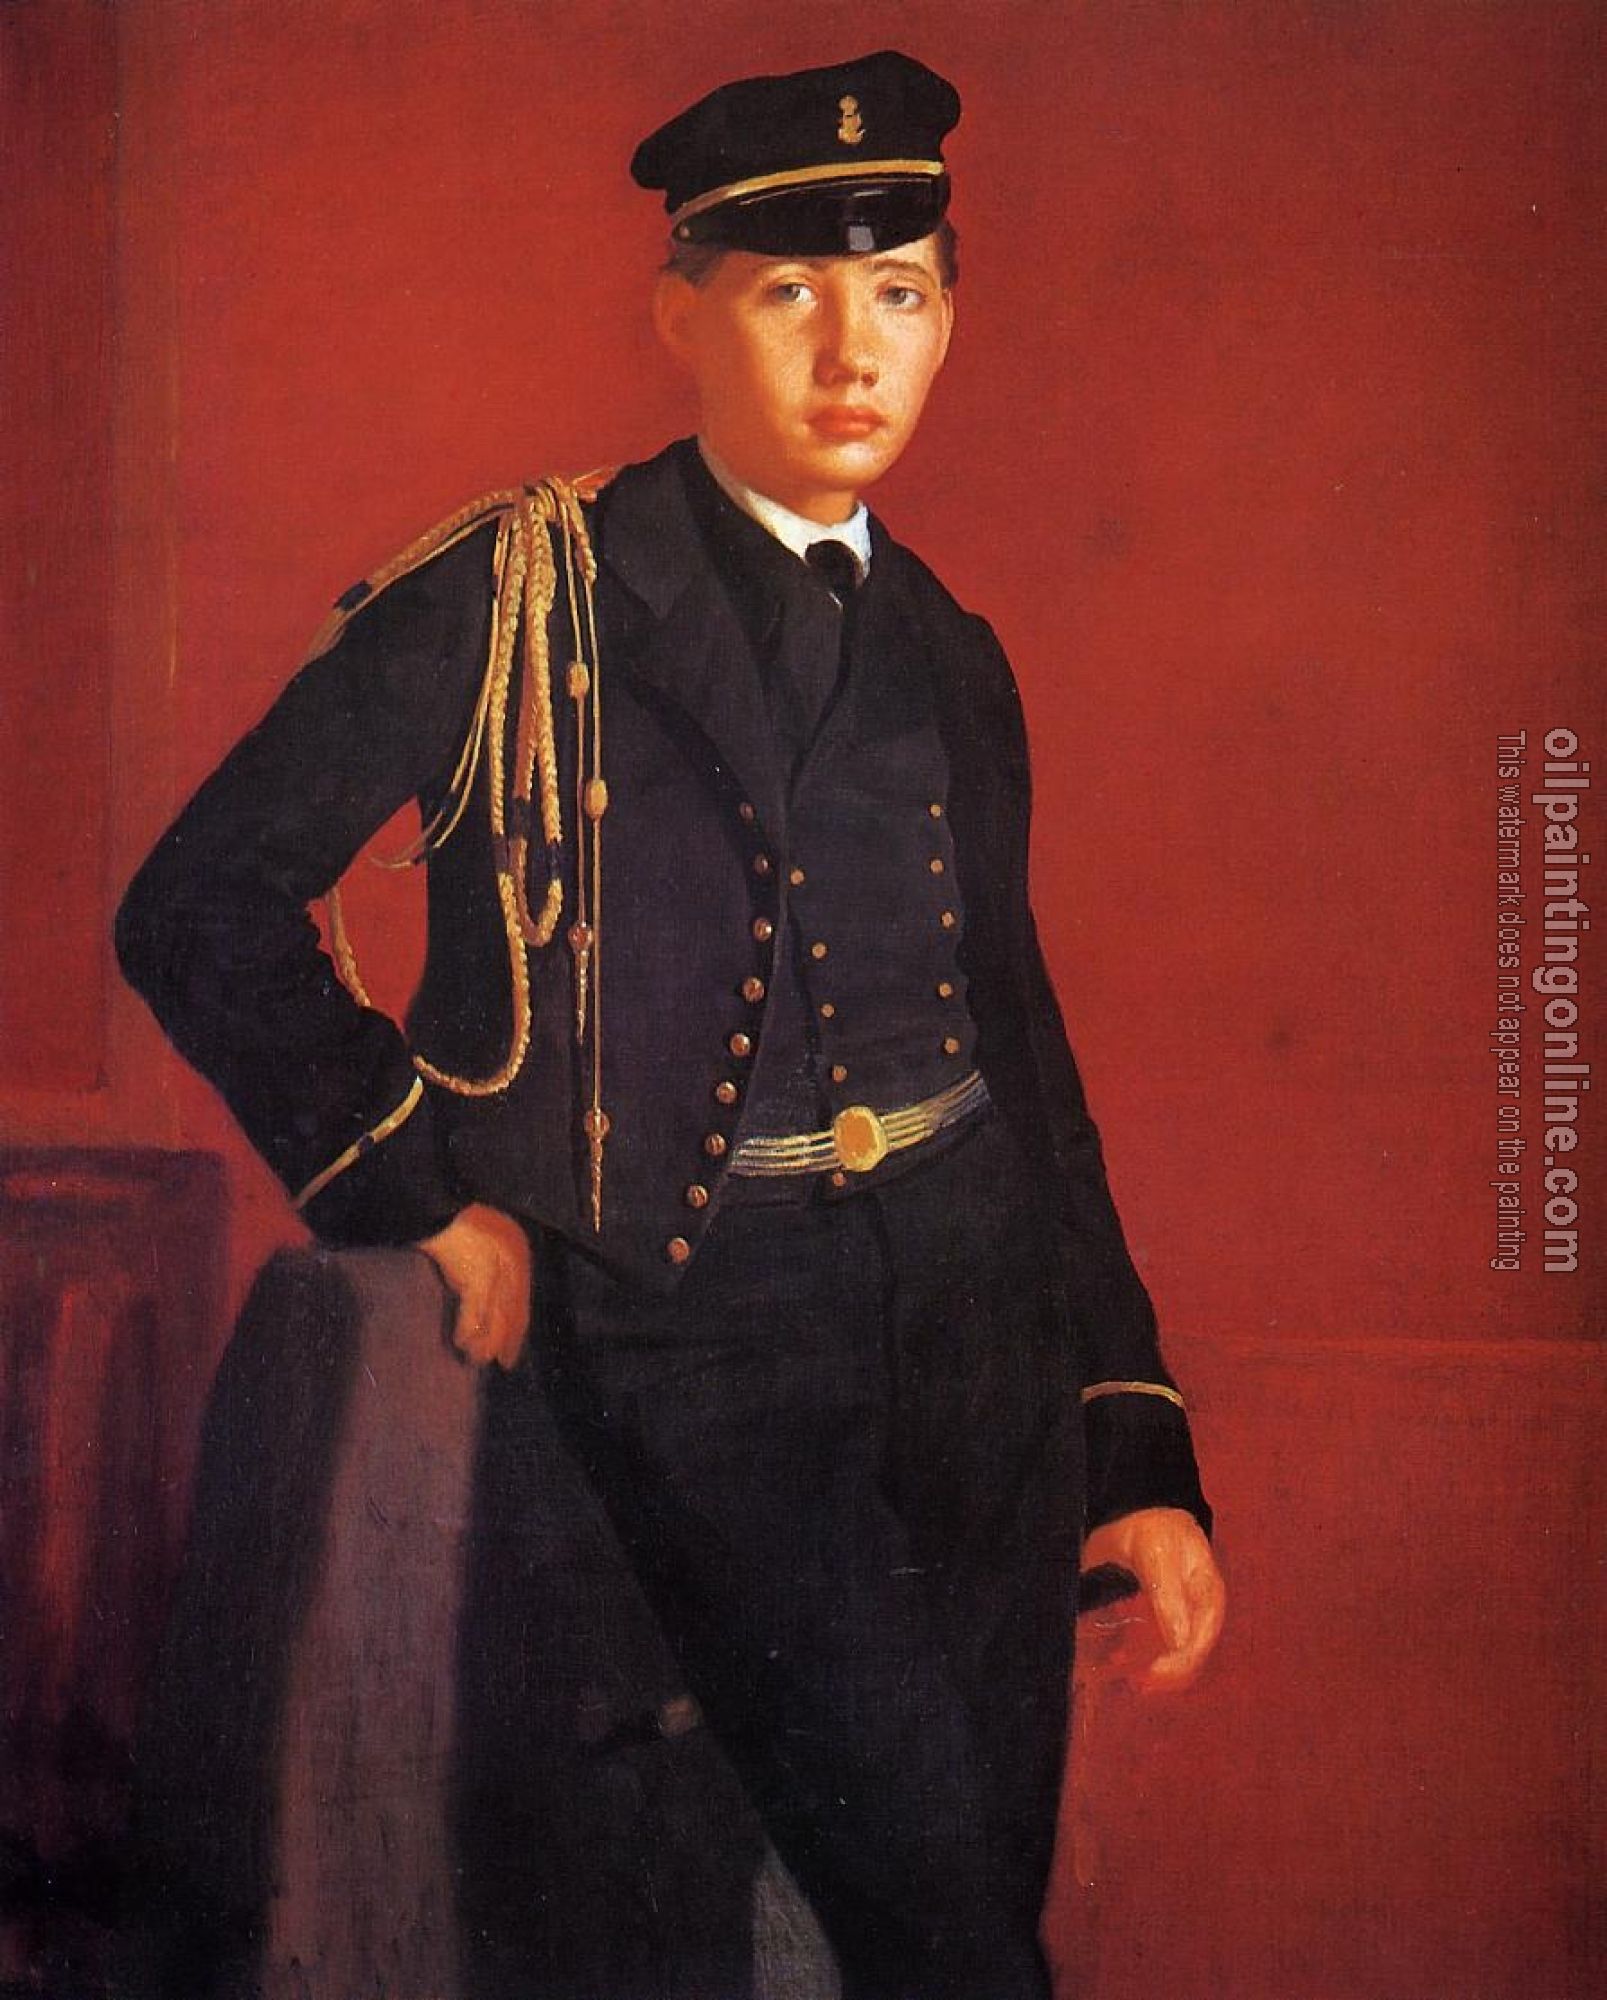 Degas, Edgar - Achille De Gas (The Artist Brother) in the Uniform of a Cade